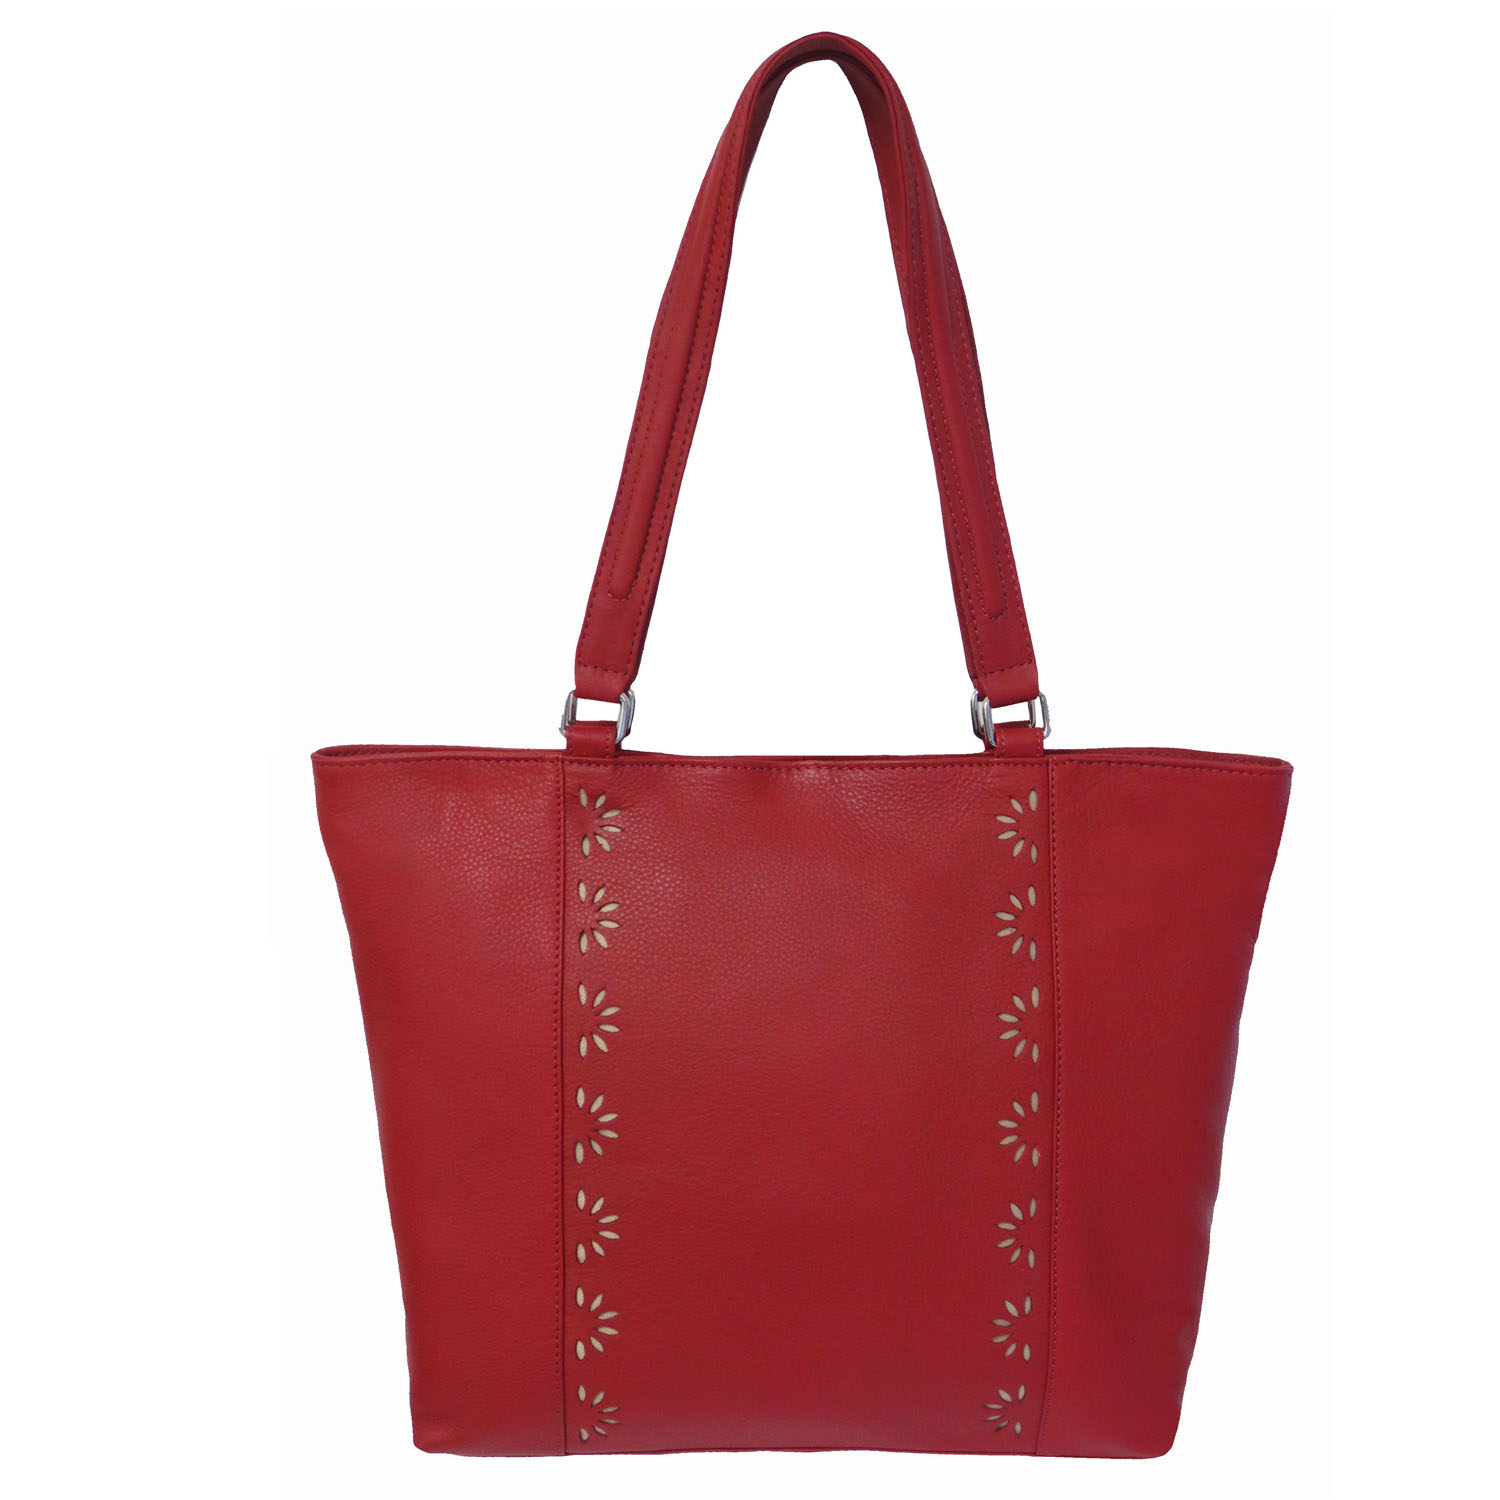 Rowallan Women's Red Leather Shoulder Bag - SALE